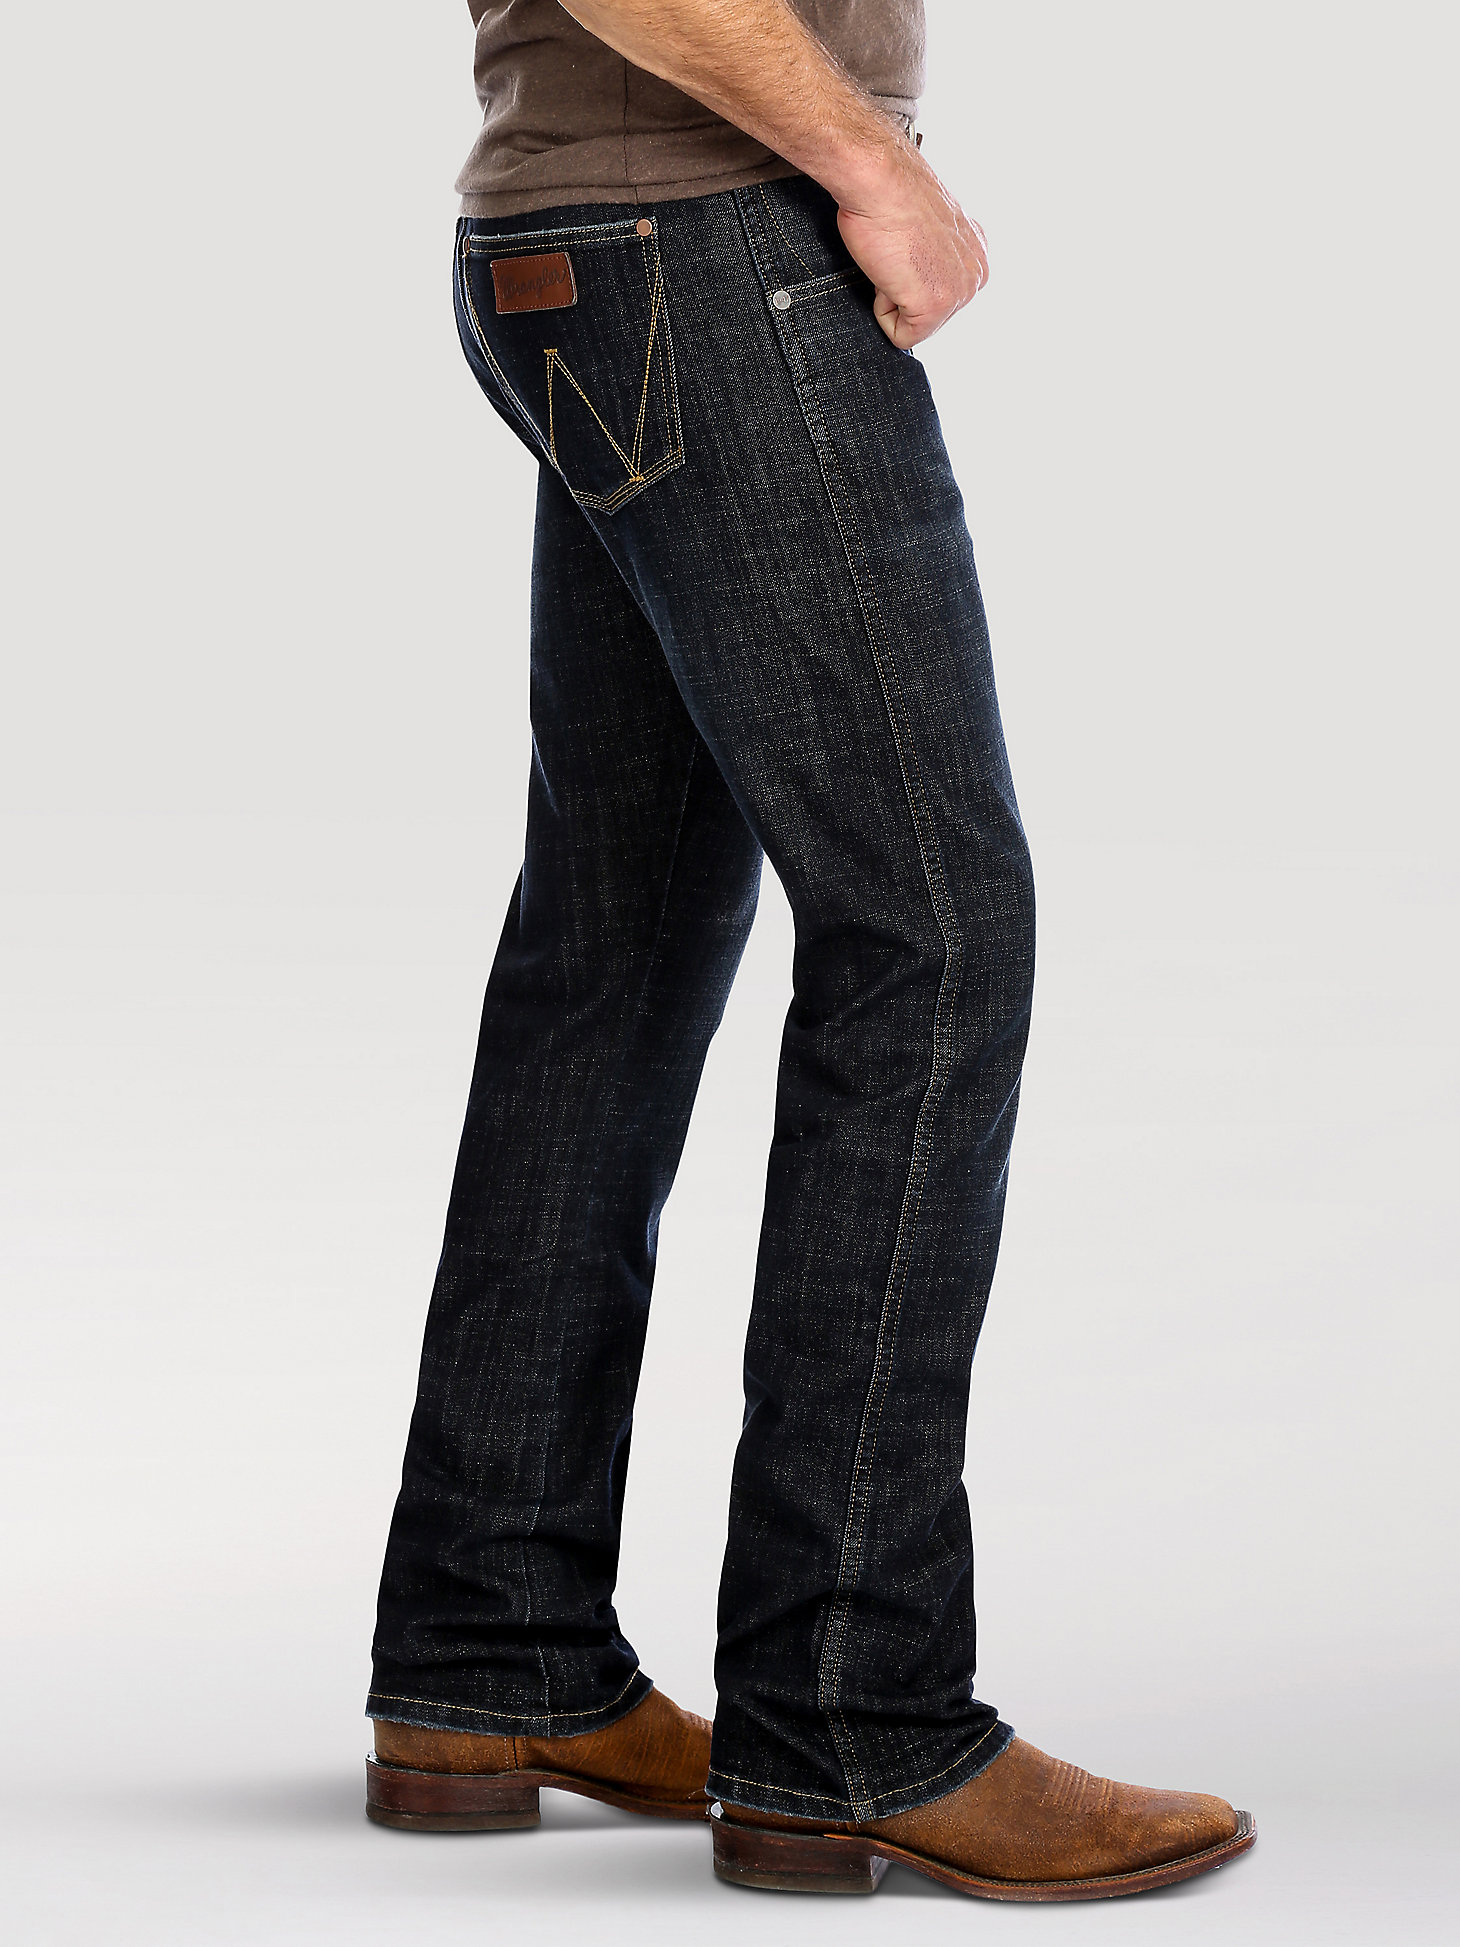 Men's Wrangler Retro® Slim Fit Bootcut Jean in Dax alternative view 2